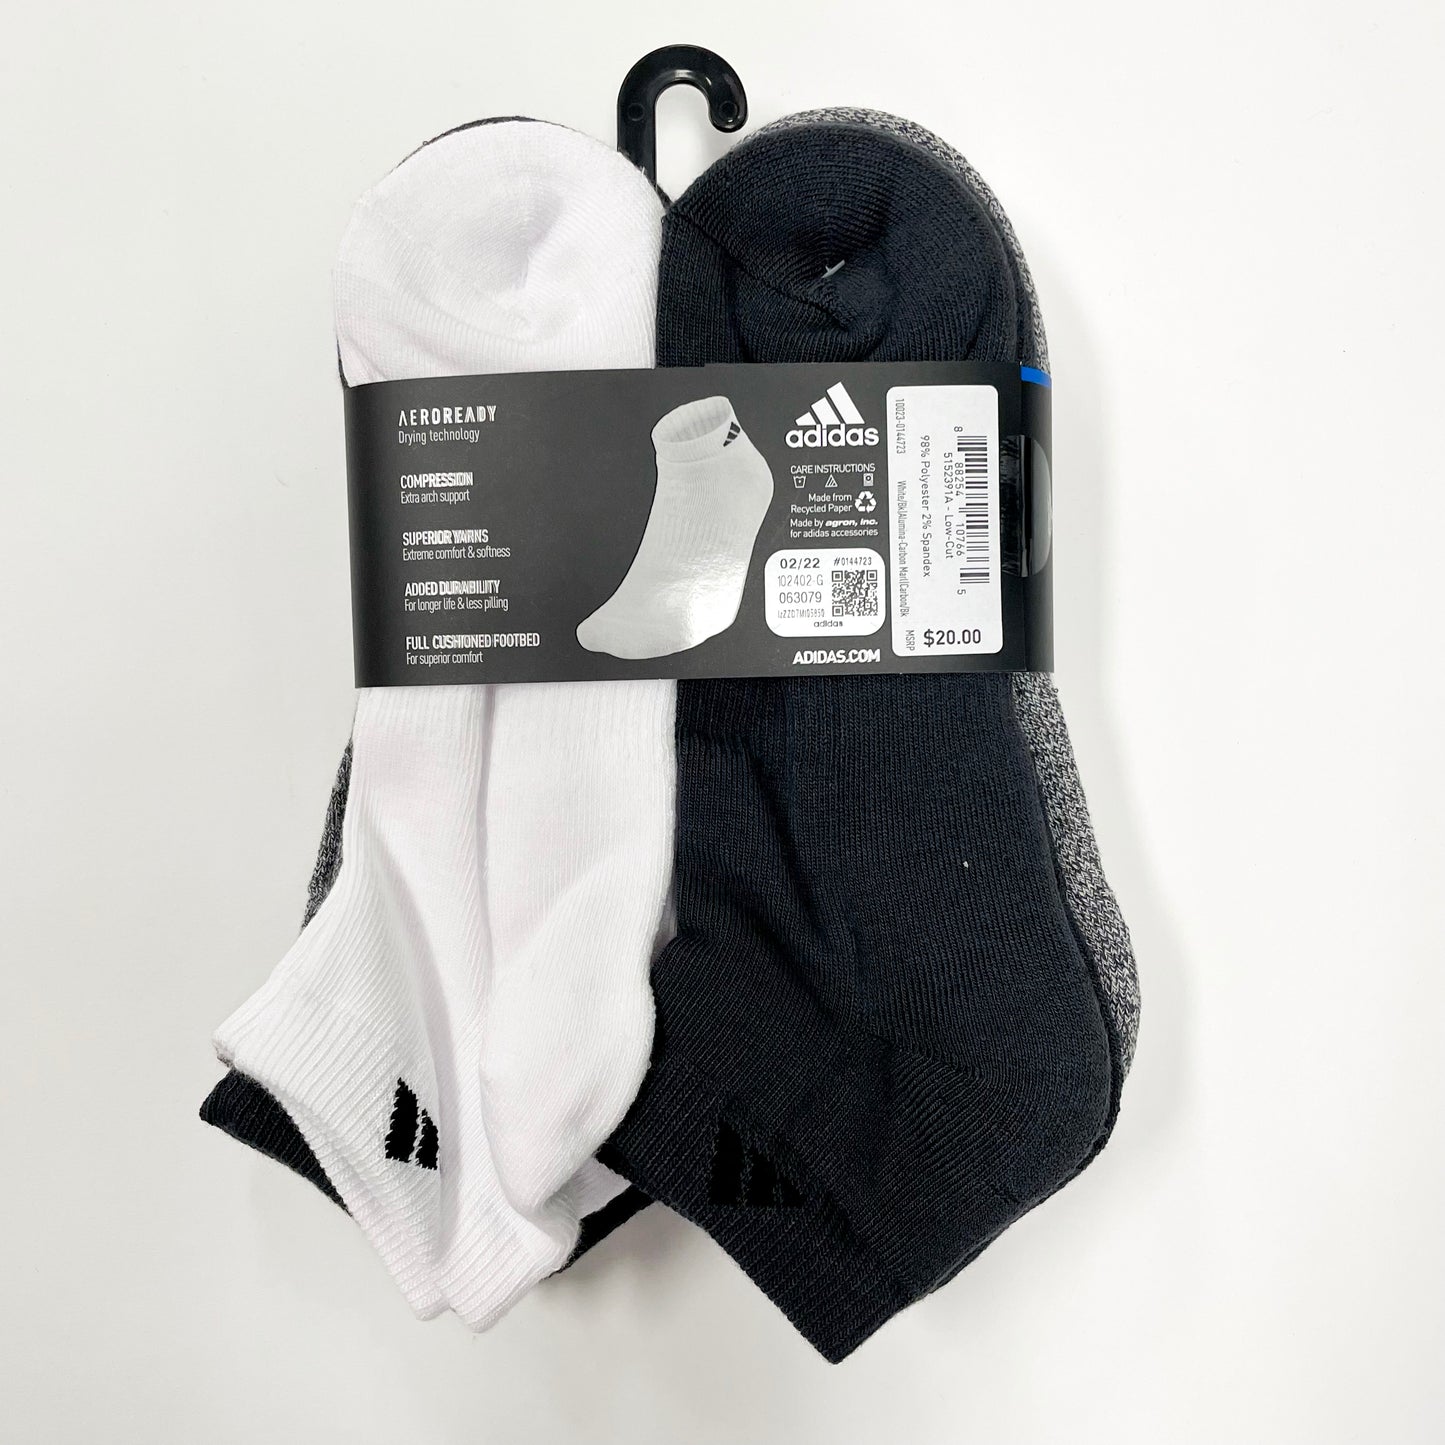 Adidas Men's Cushioned Low-cut 6 pairs socks